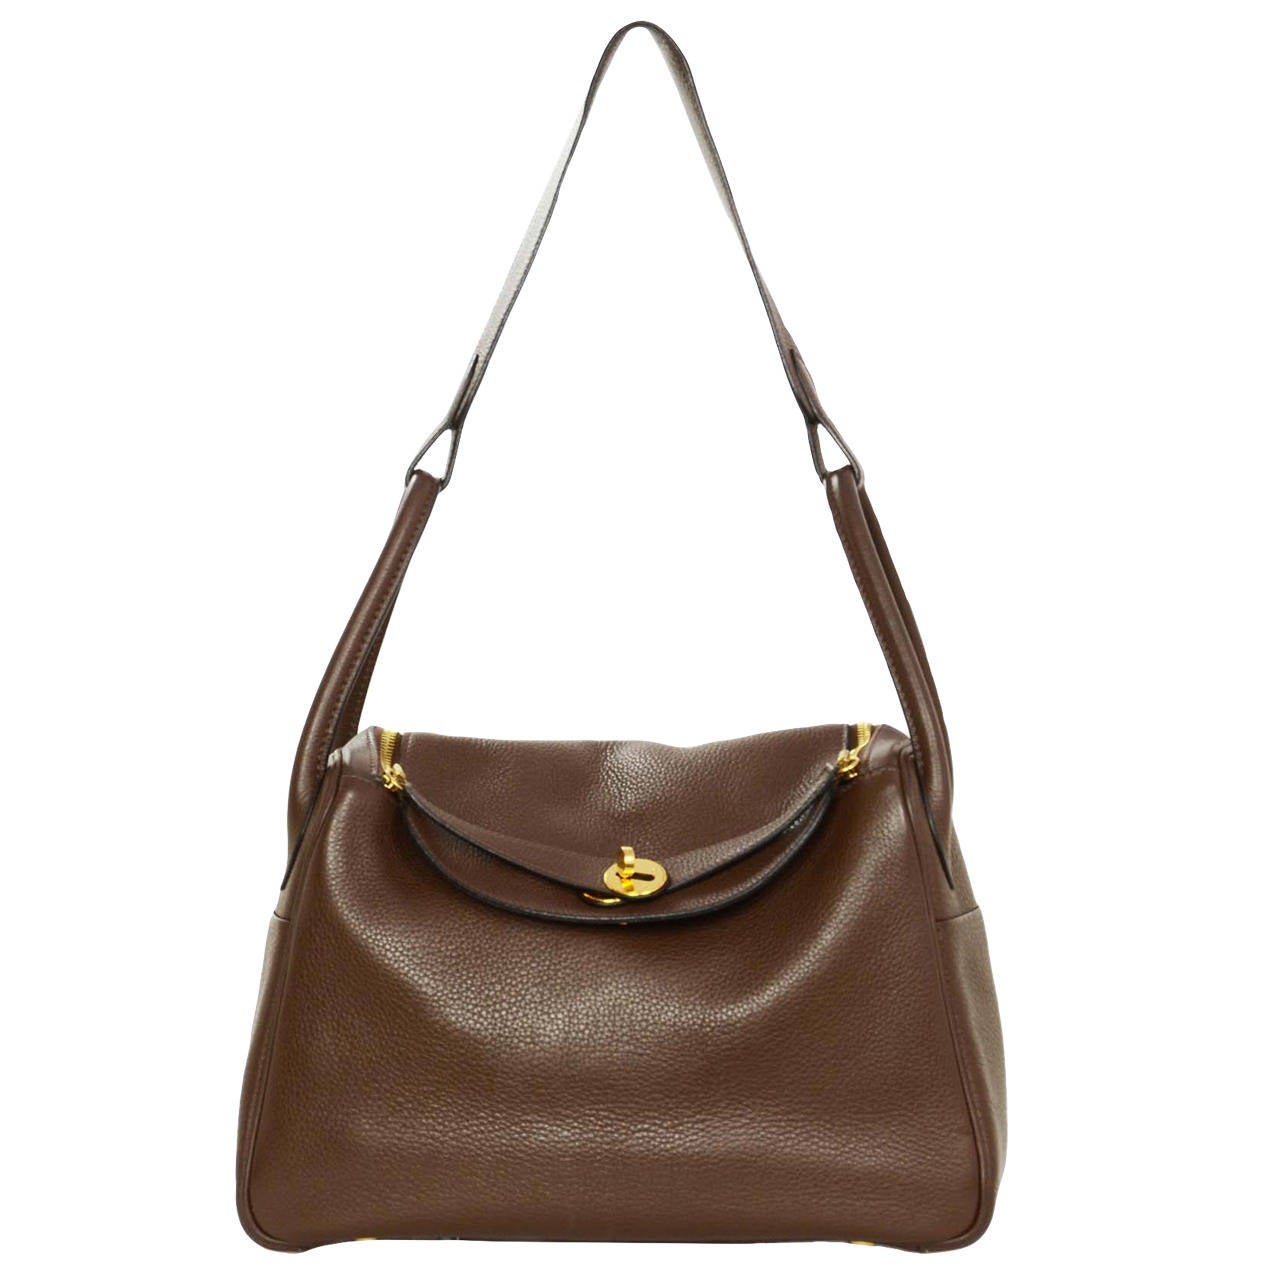 HERMES 30CM Brown Togo Leather Lindy Bag W/GHW Rt. $7,750 at 1stdibs  